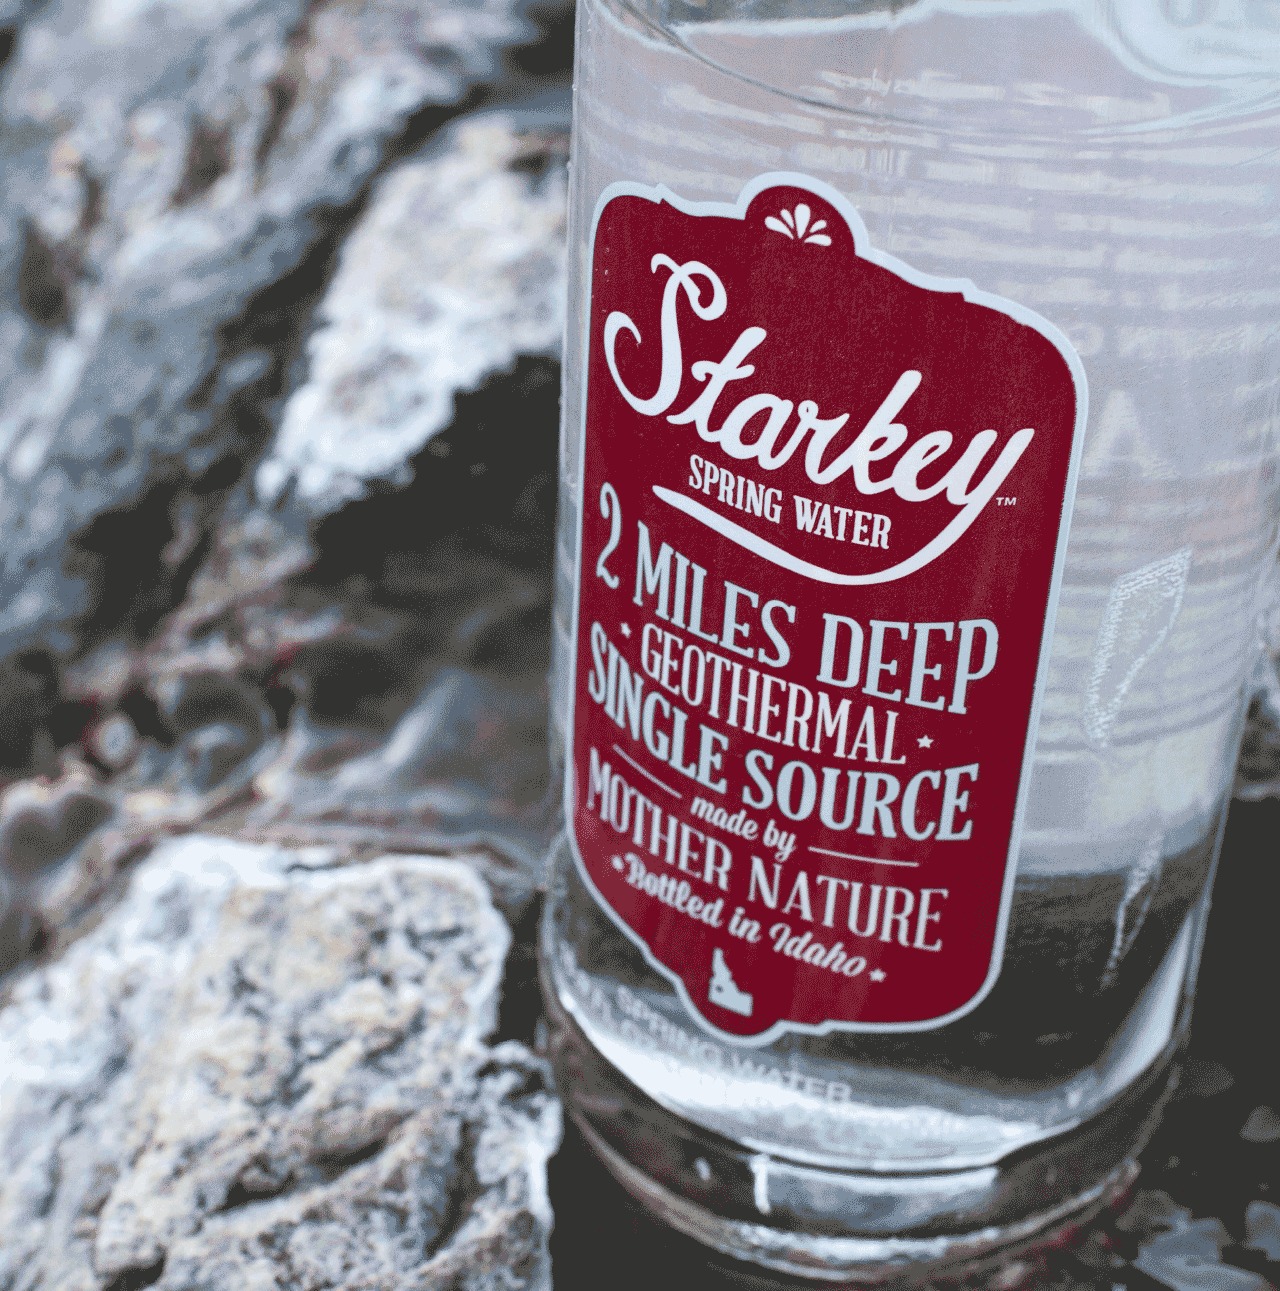 Starkey Water Brand Packaging, Brand Identity, Visual Identity